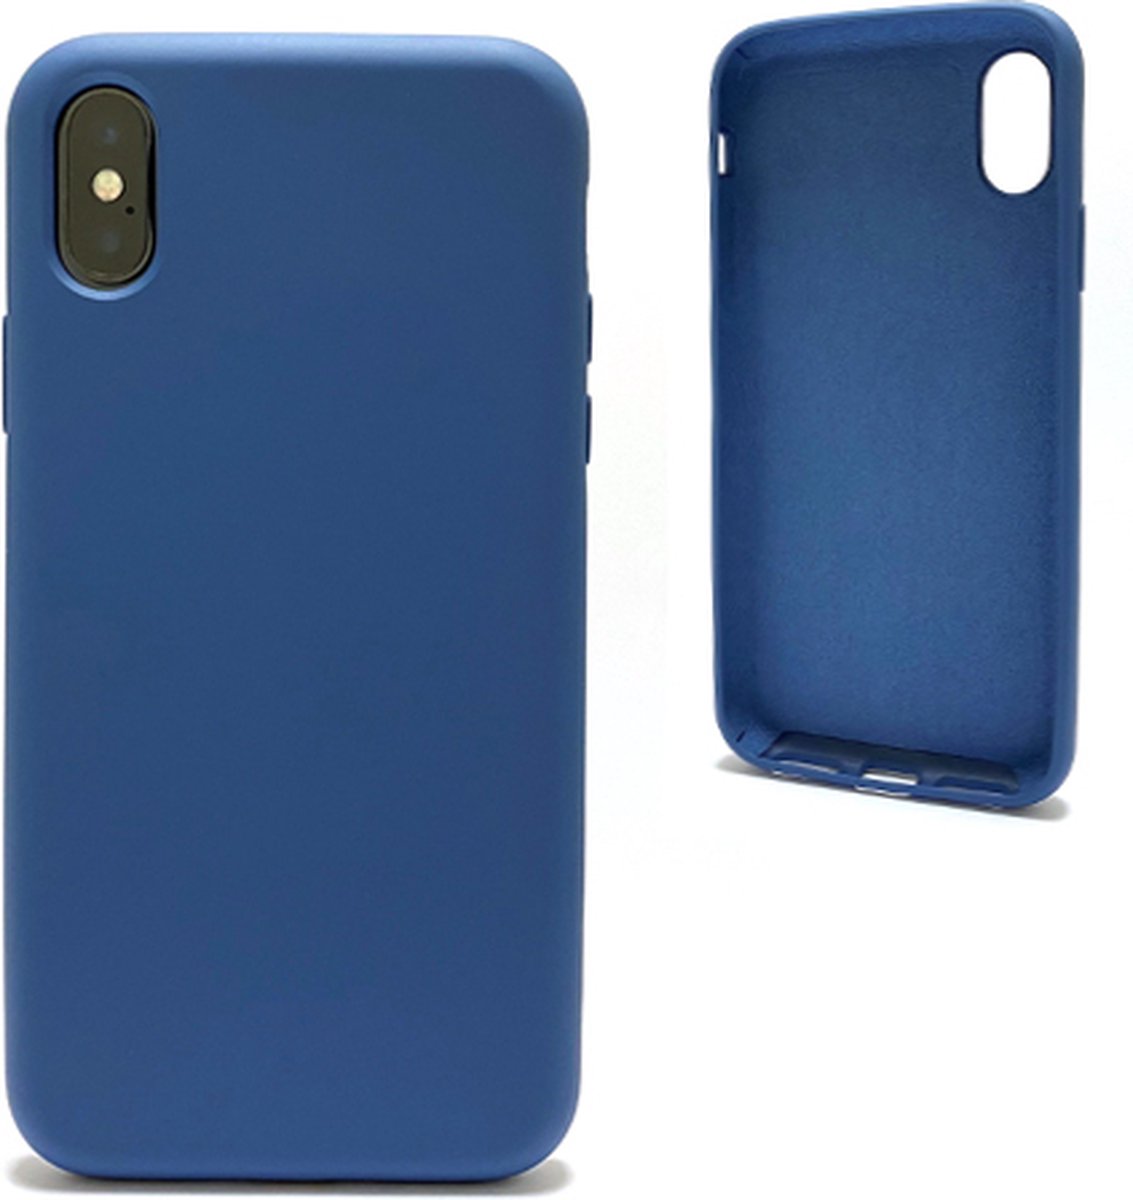 iNcentive Soft Gelly Case Galaxy A10 cobalt blue